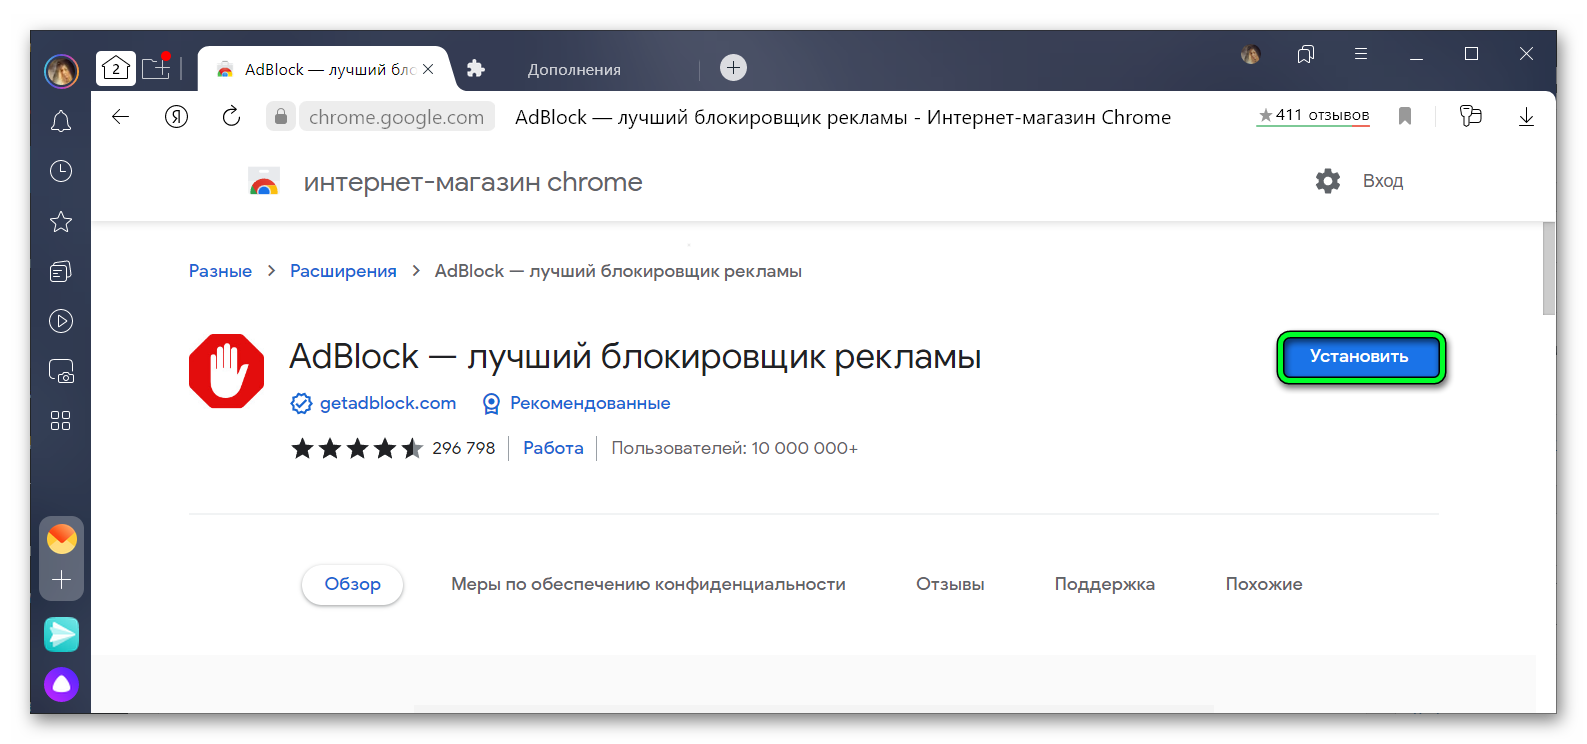 AdBlock - лучший блокировщик рекламы - Интернет-магазин Chrome - Яндекс-Браузер